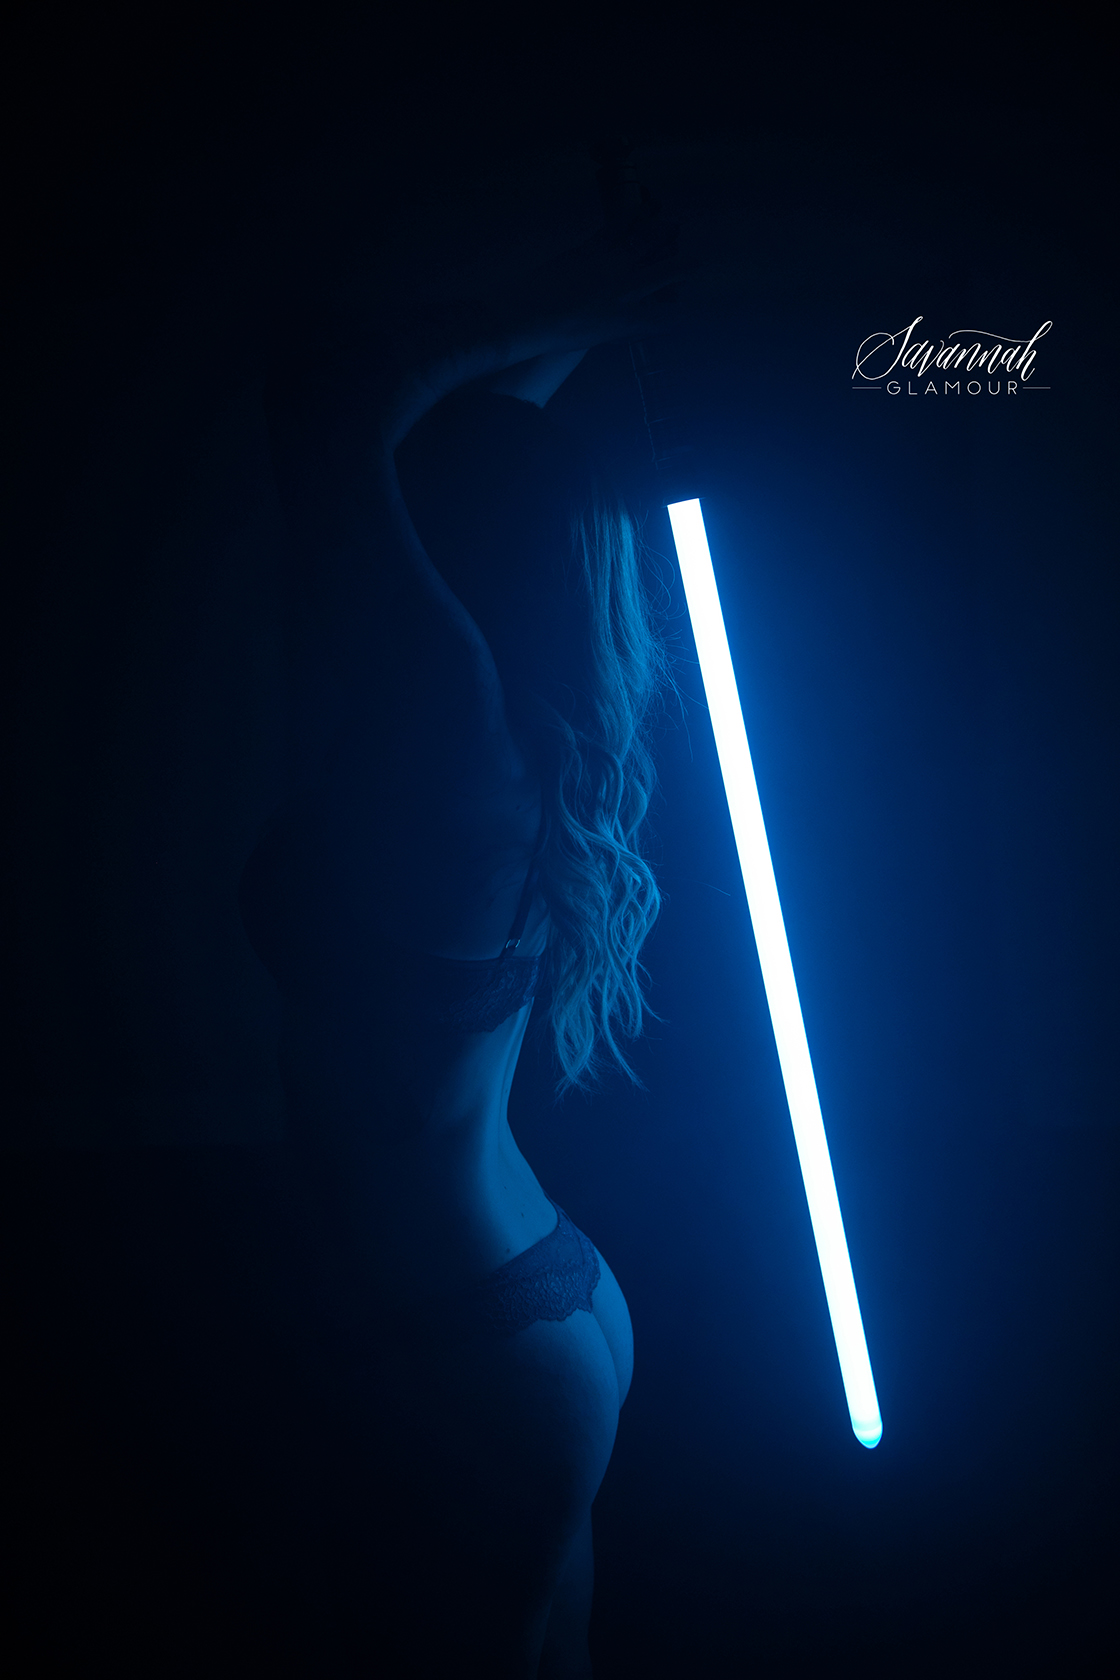 lightsaber illuminating woman's back wearing lingerie